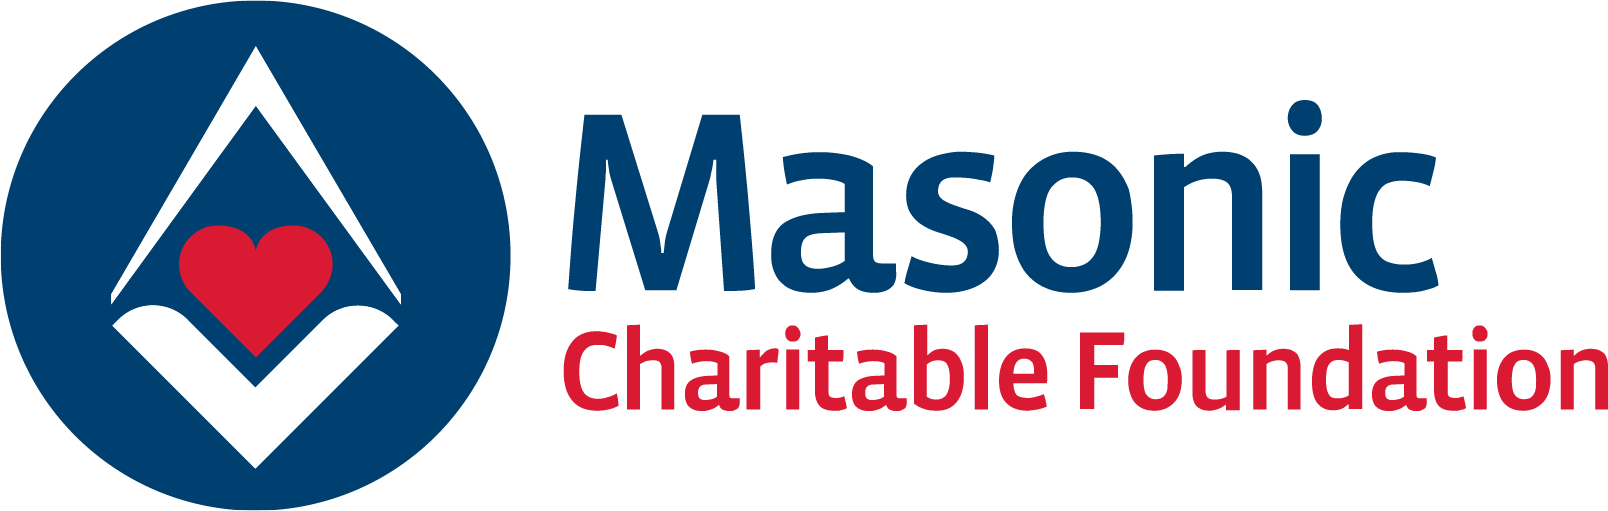 masonic charitable foundation logo